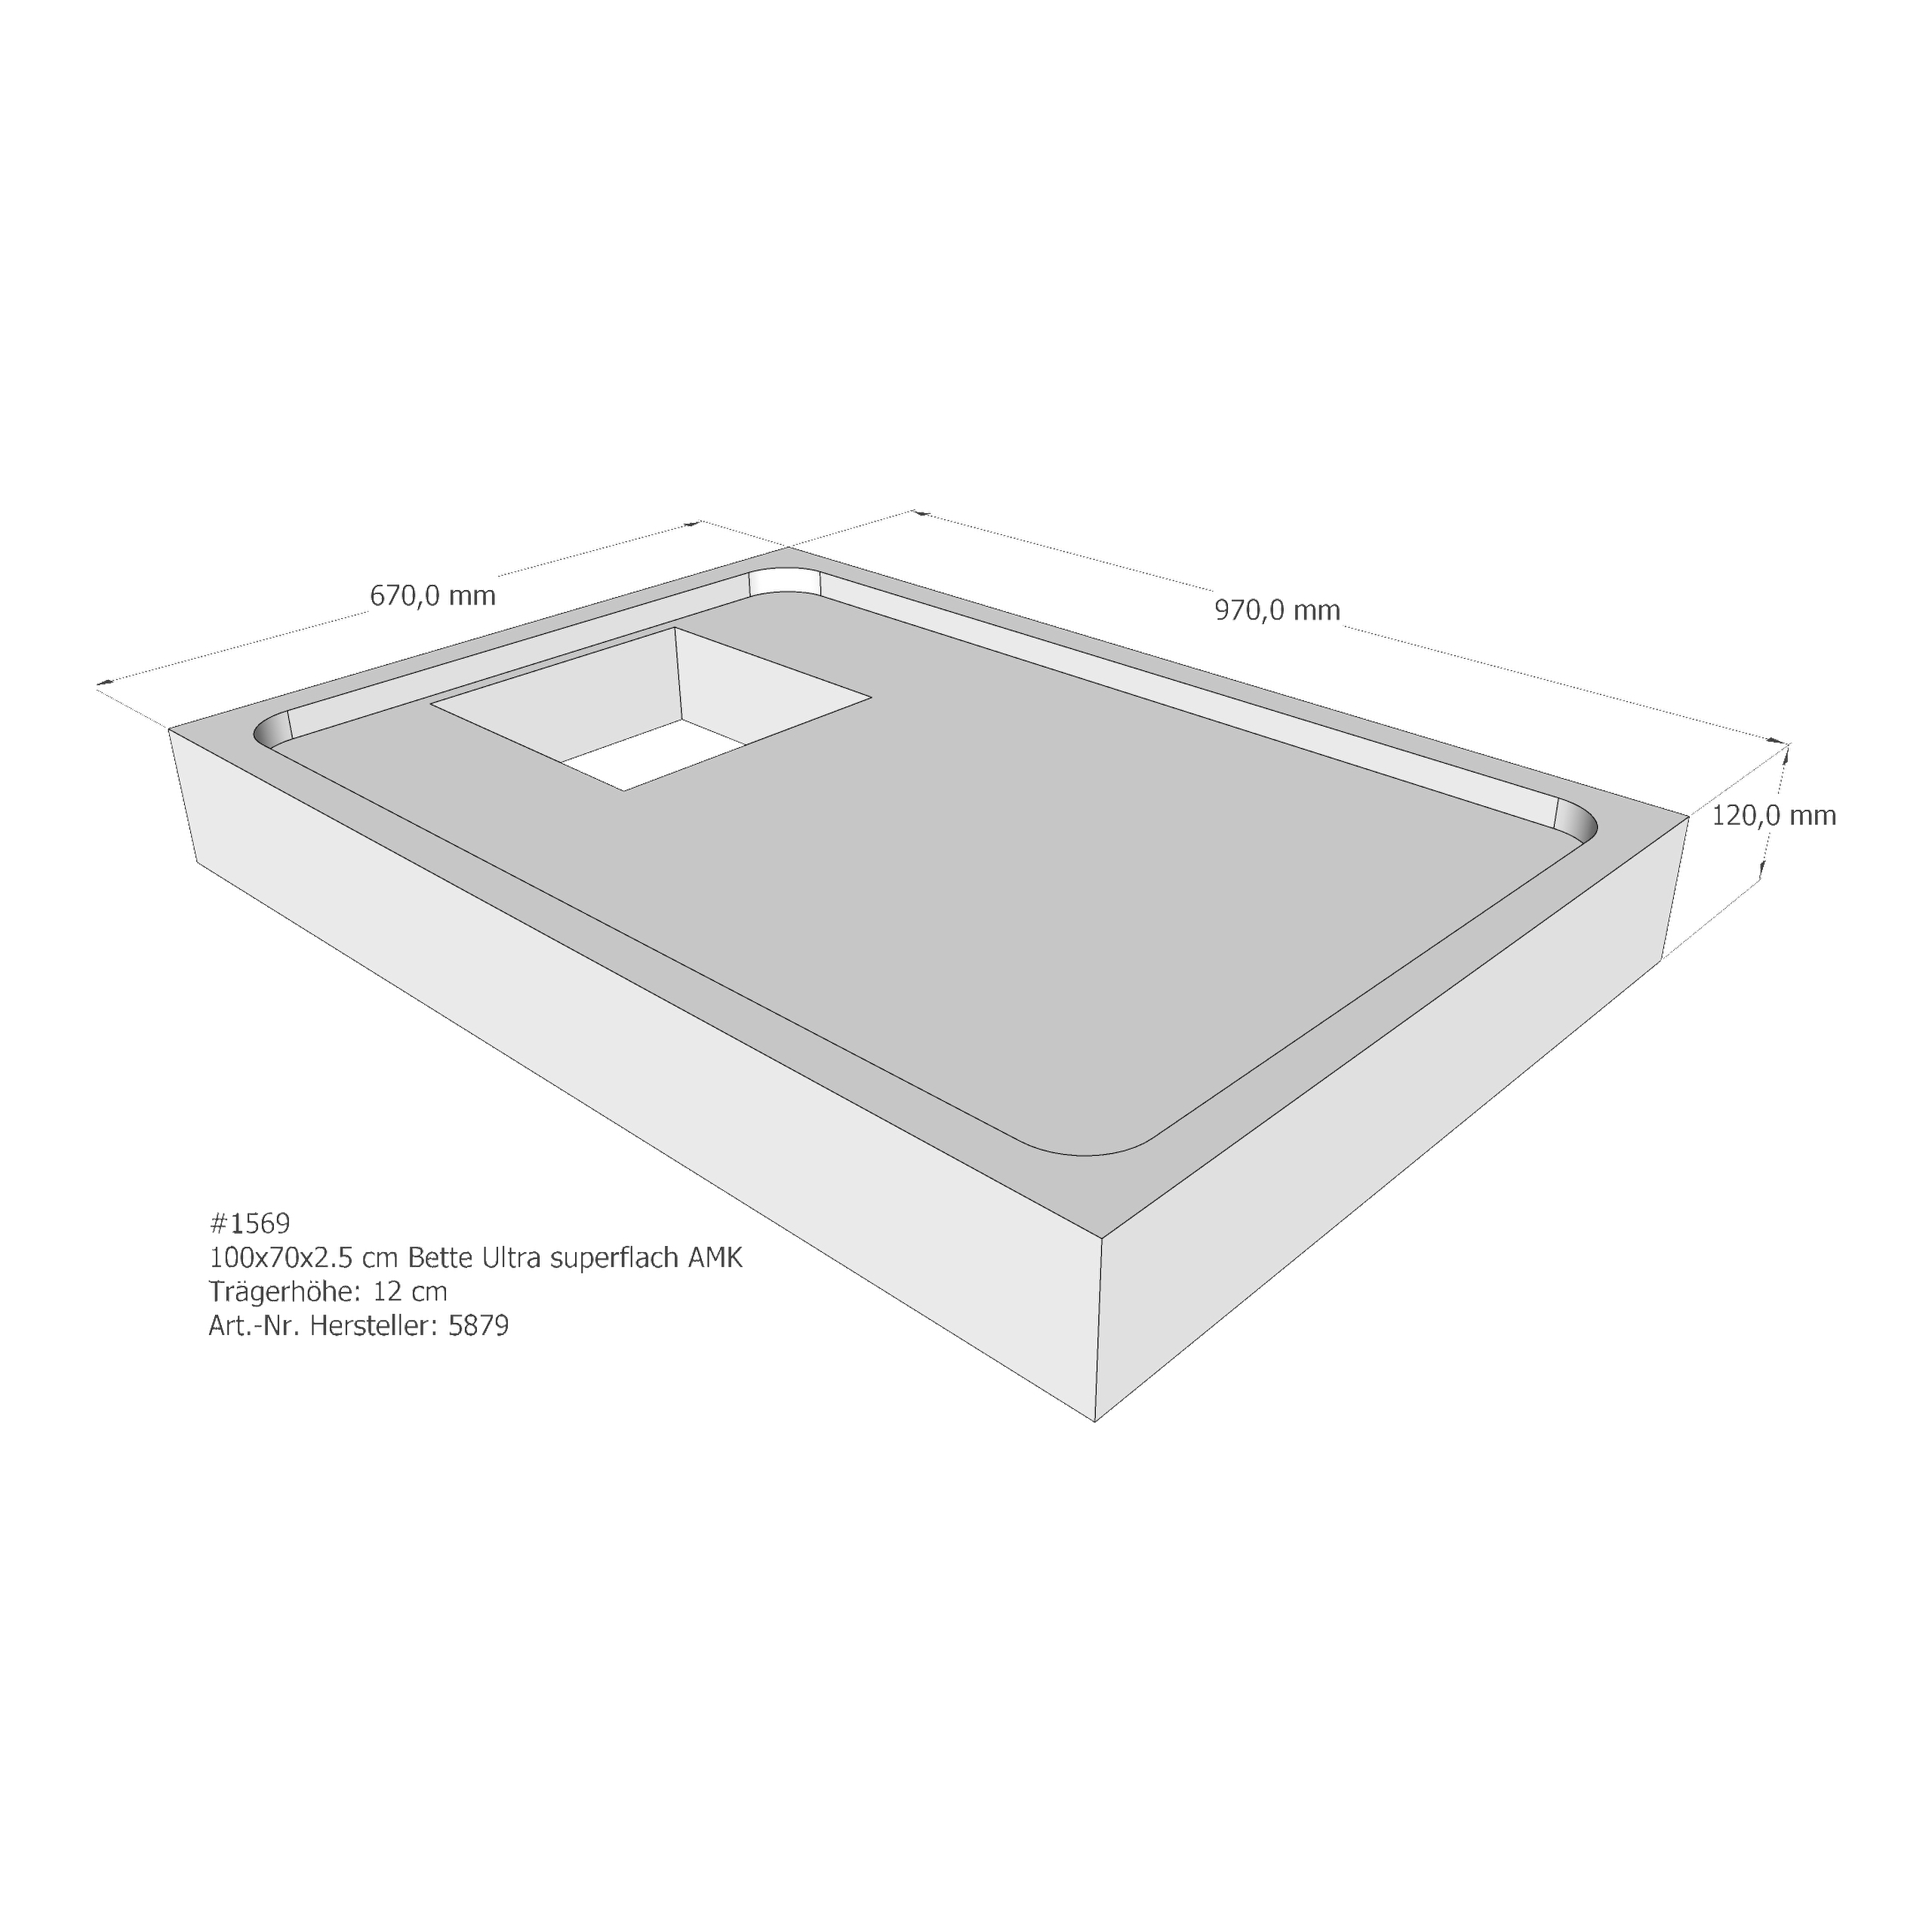 Duschwannenträger für Bette BetteUltra (superflach) 100 × 70 × 2,5 cm